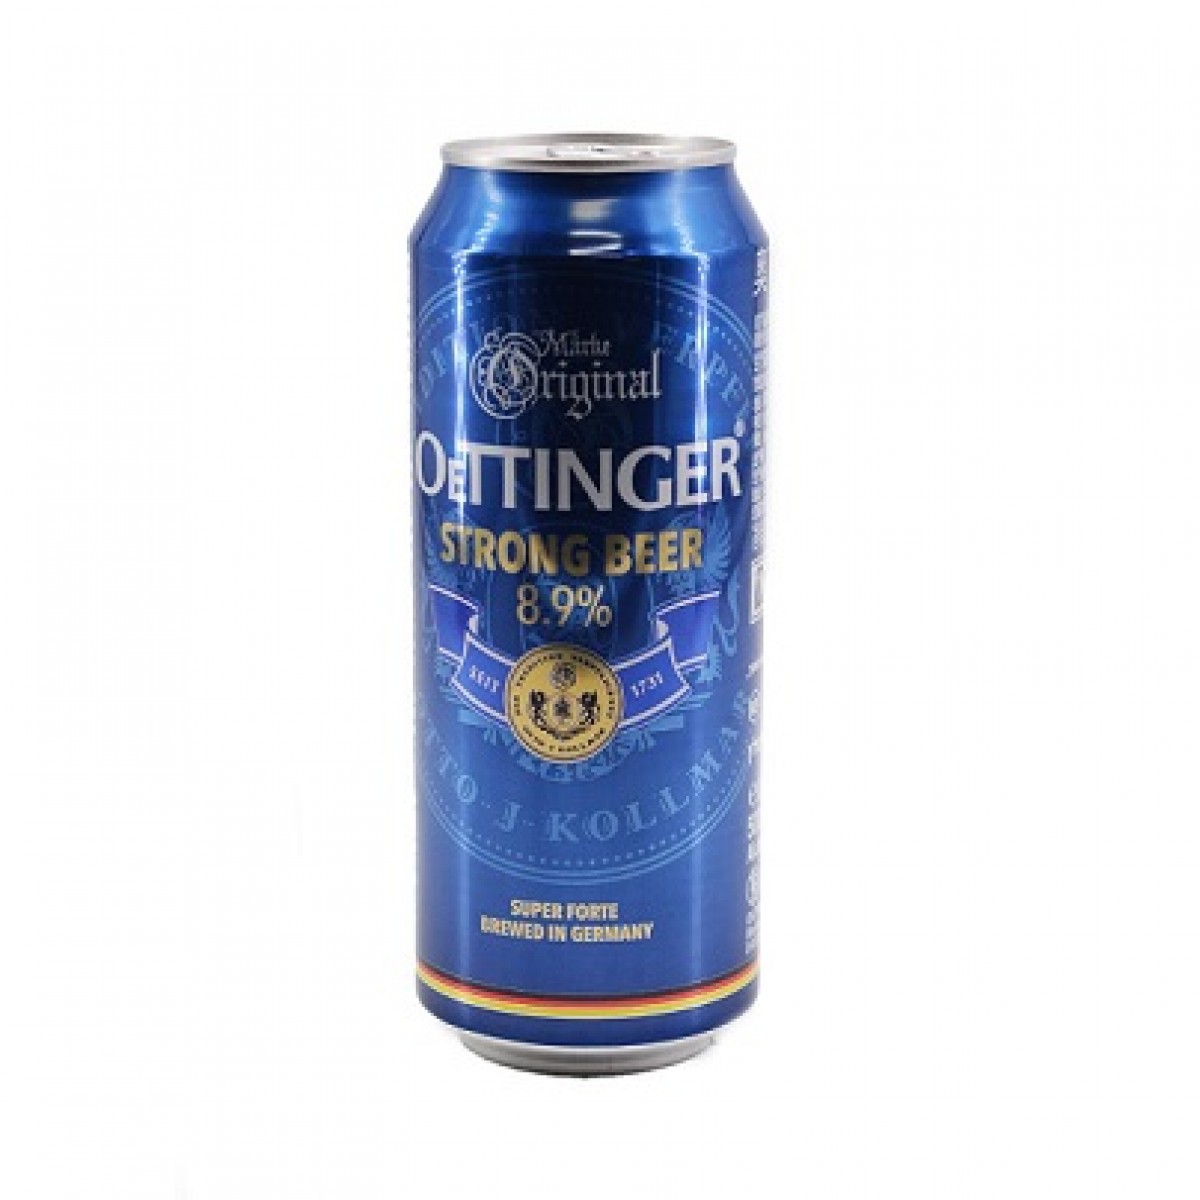 Bia nặng Oettinger 8,9% - lon 500ml  